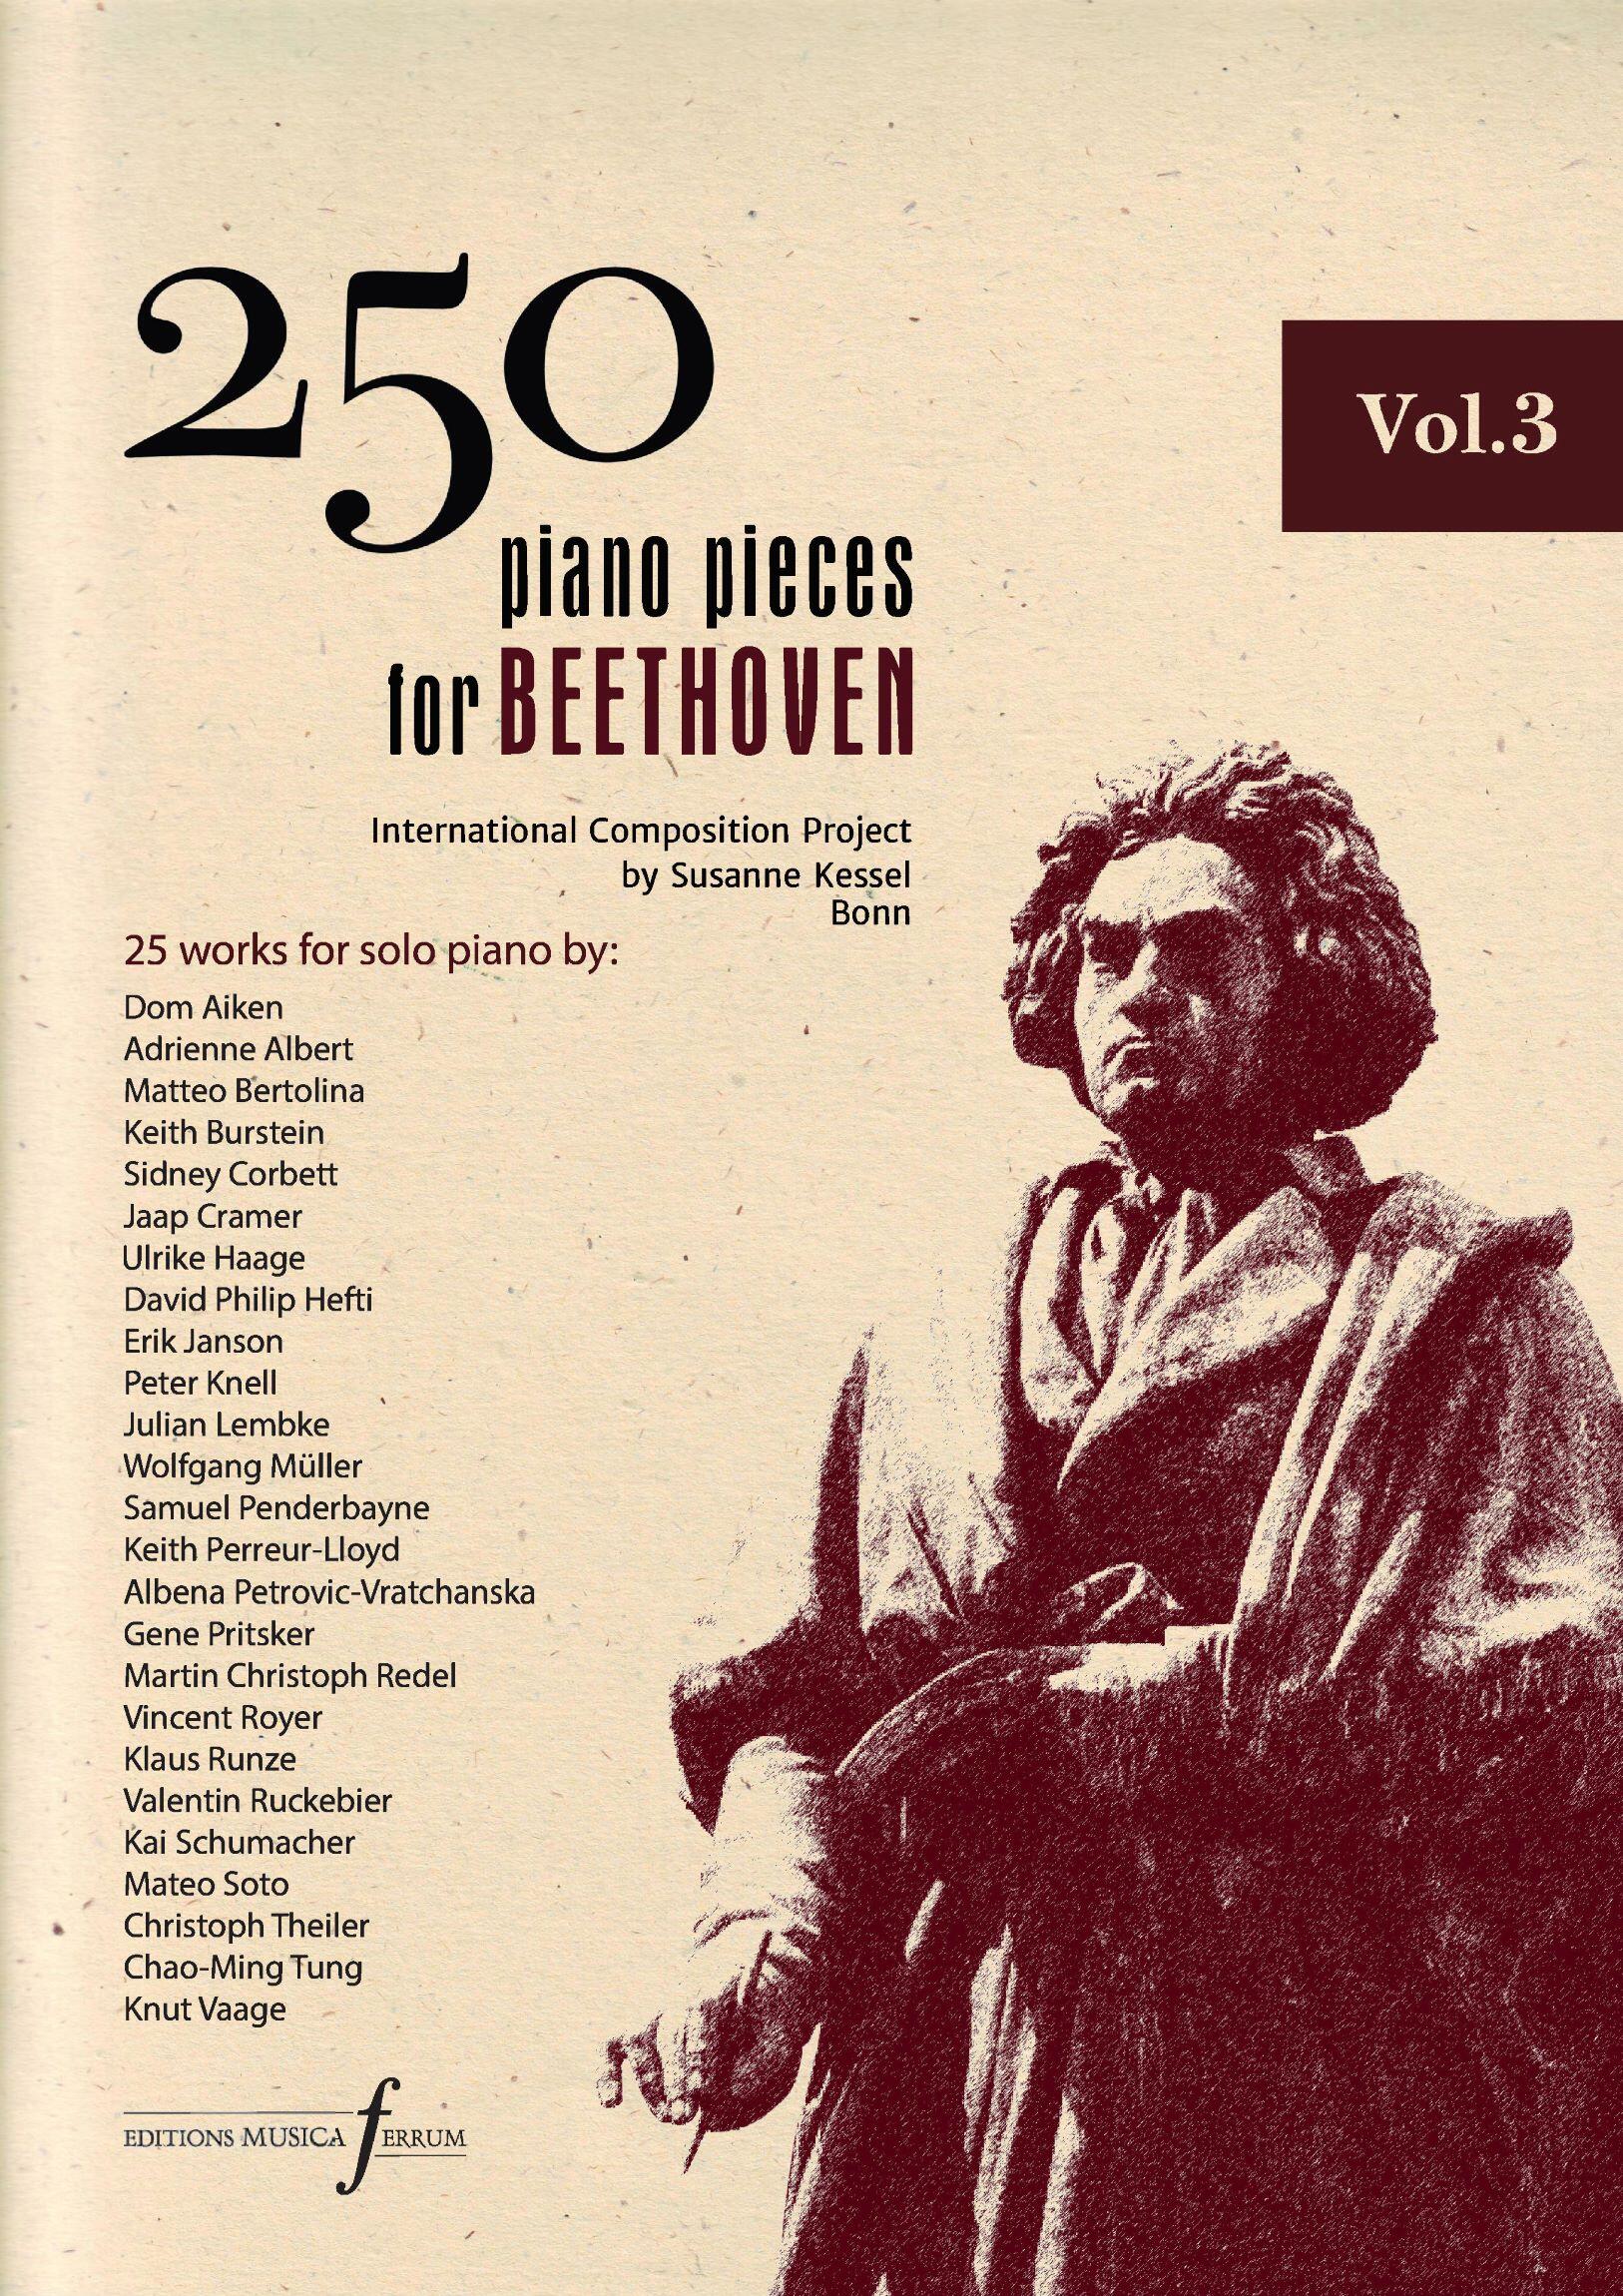 Musica Ferrum 250 Piano Pieces For Beethoven - Vol. 3 : photo 1